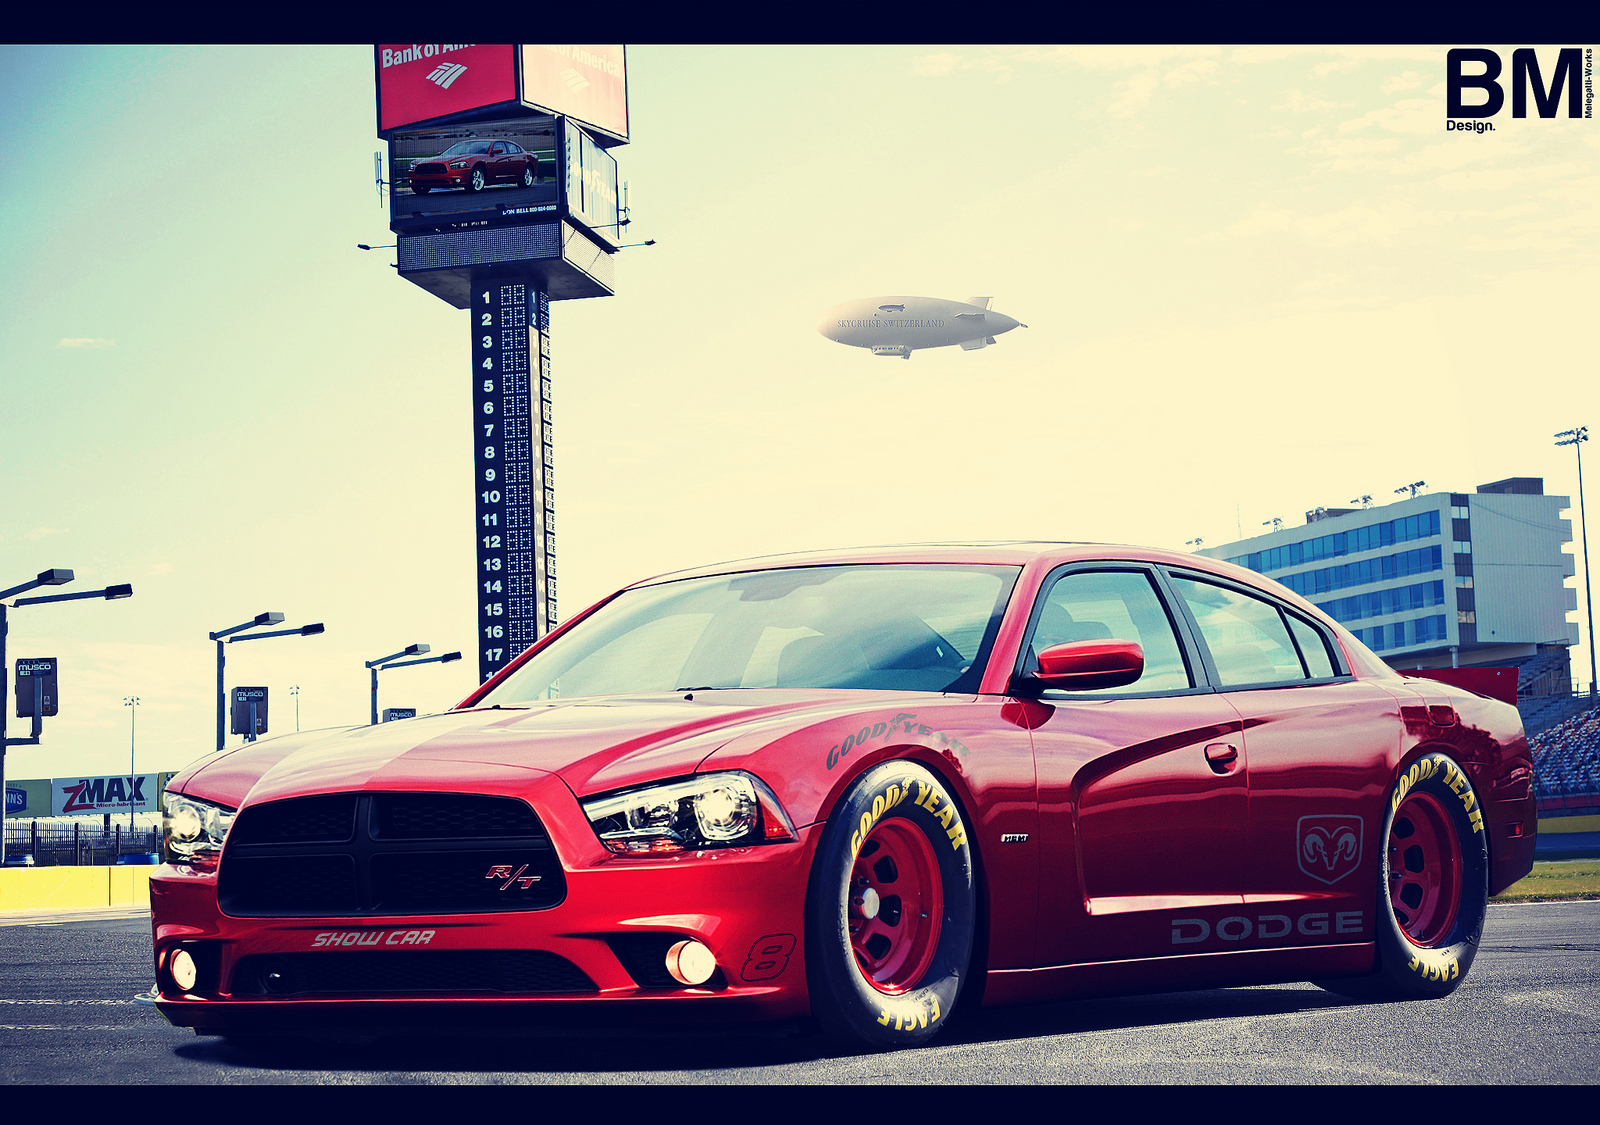 Dodge Charger Nascar ShowCar | Flickr - Photo Sharing!